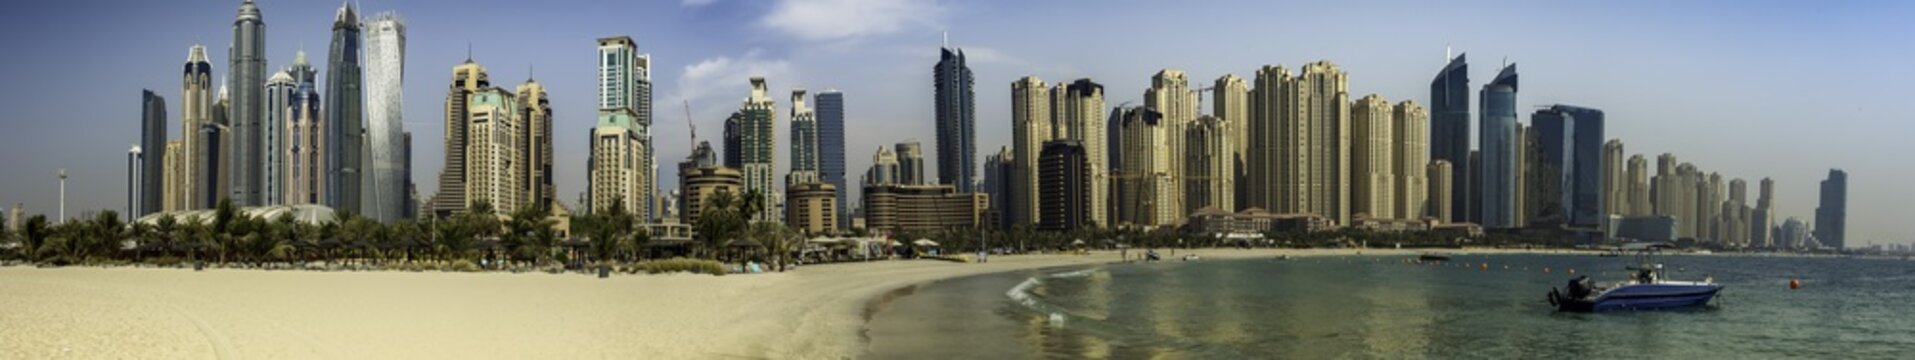 Panorama of Jumeirah beach, Dubai, UAE